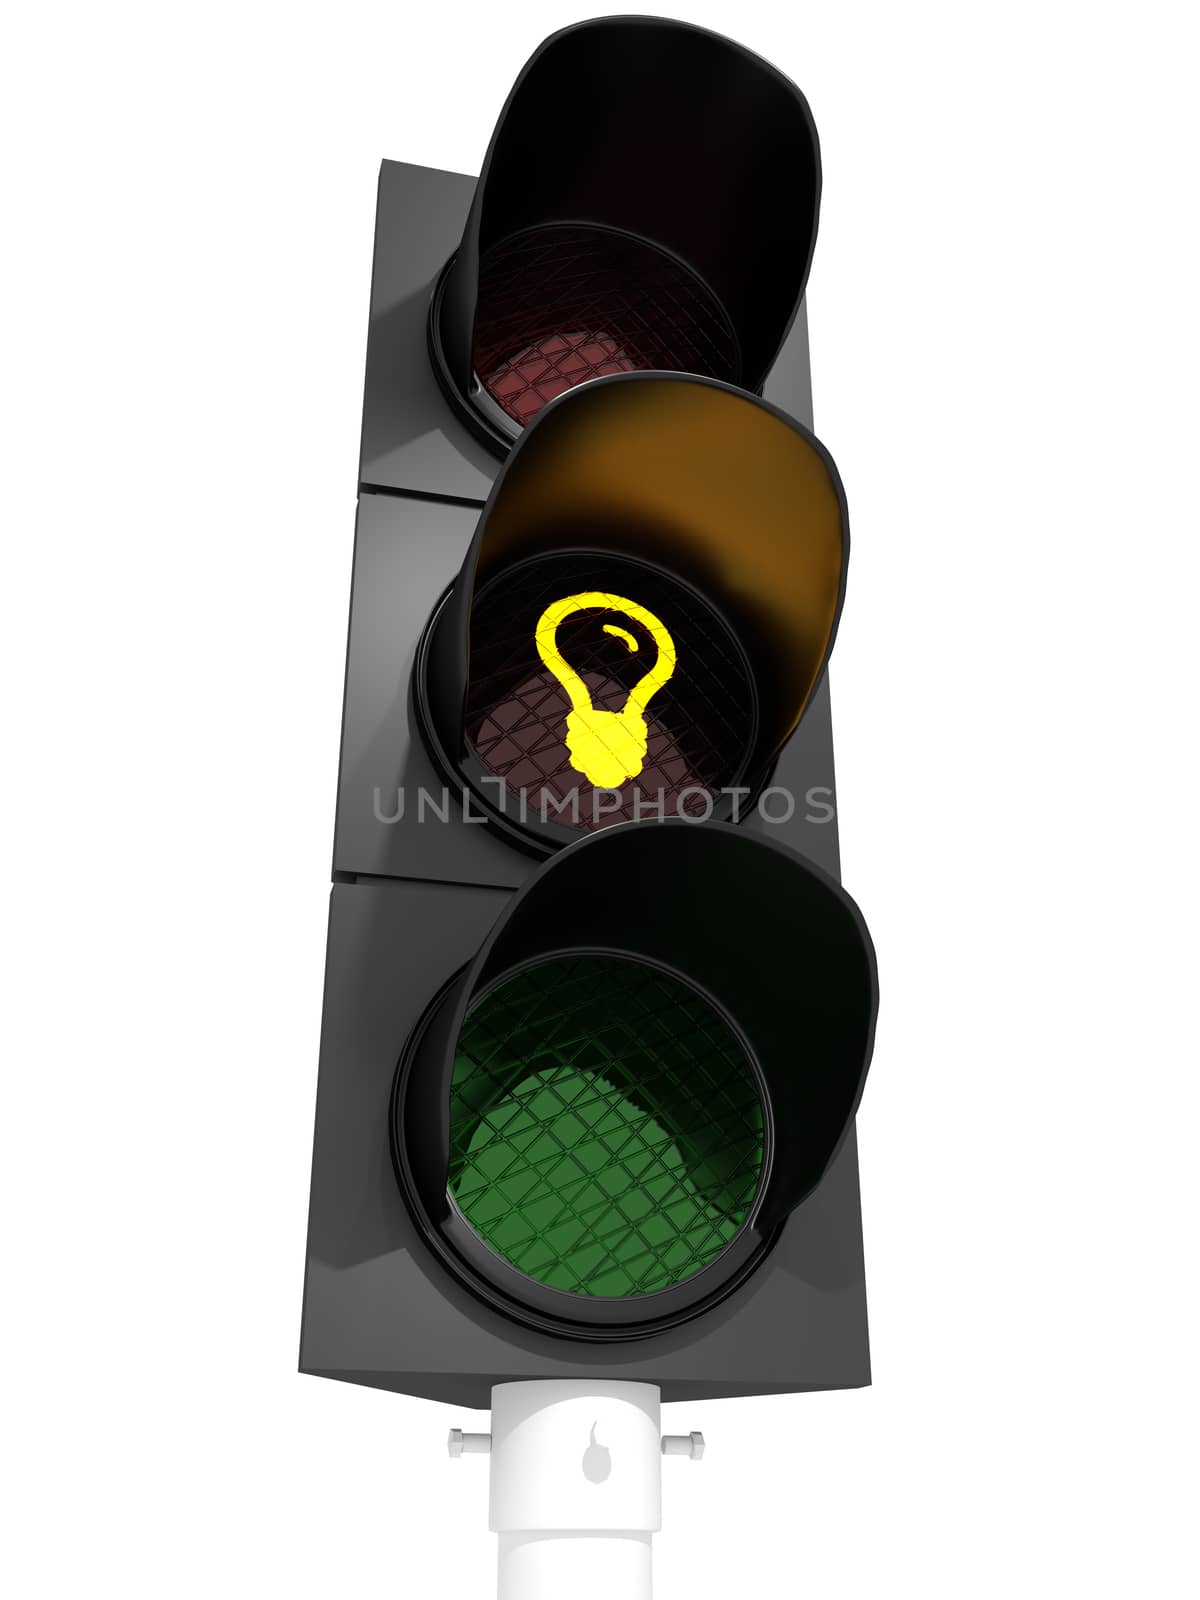 Traffic light showing a "idea"-sign.